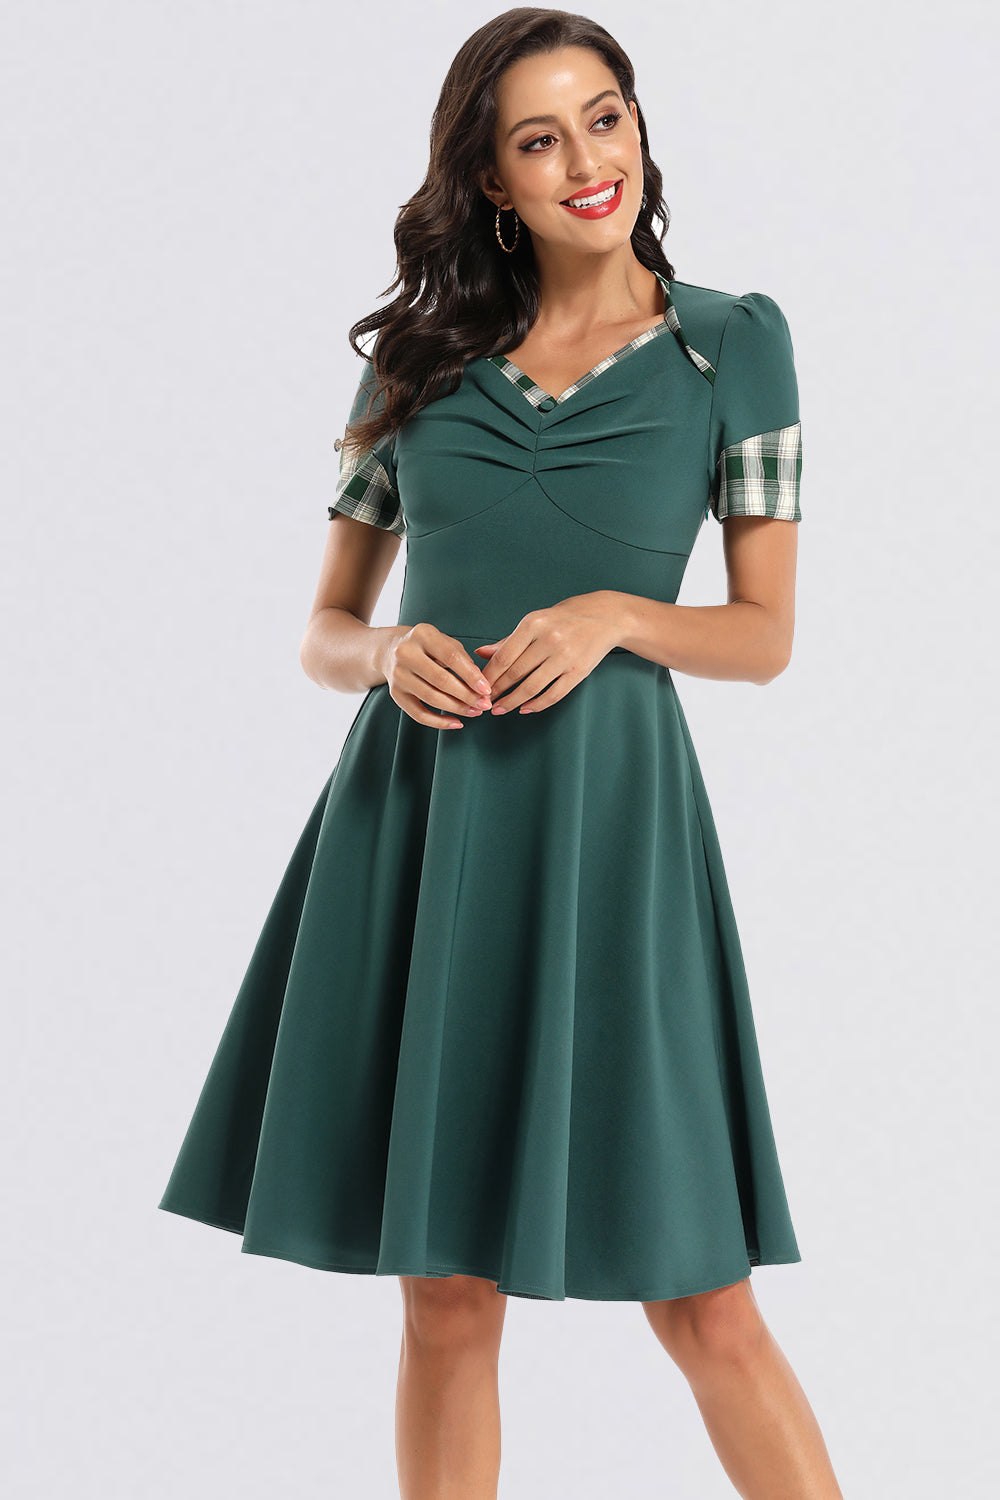 Pleating Short Sleeve Clash Colors Vintage Dresses